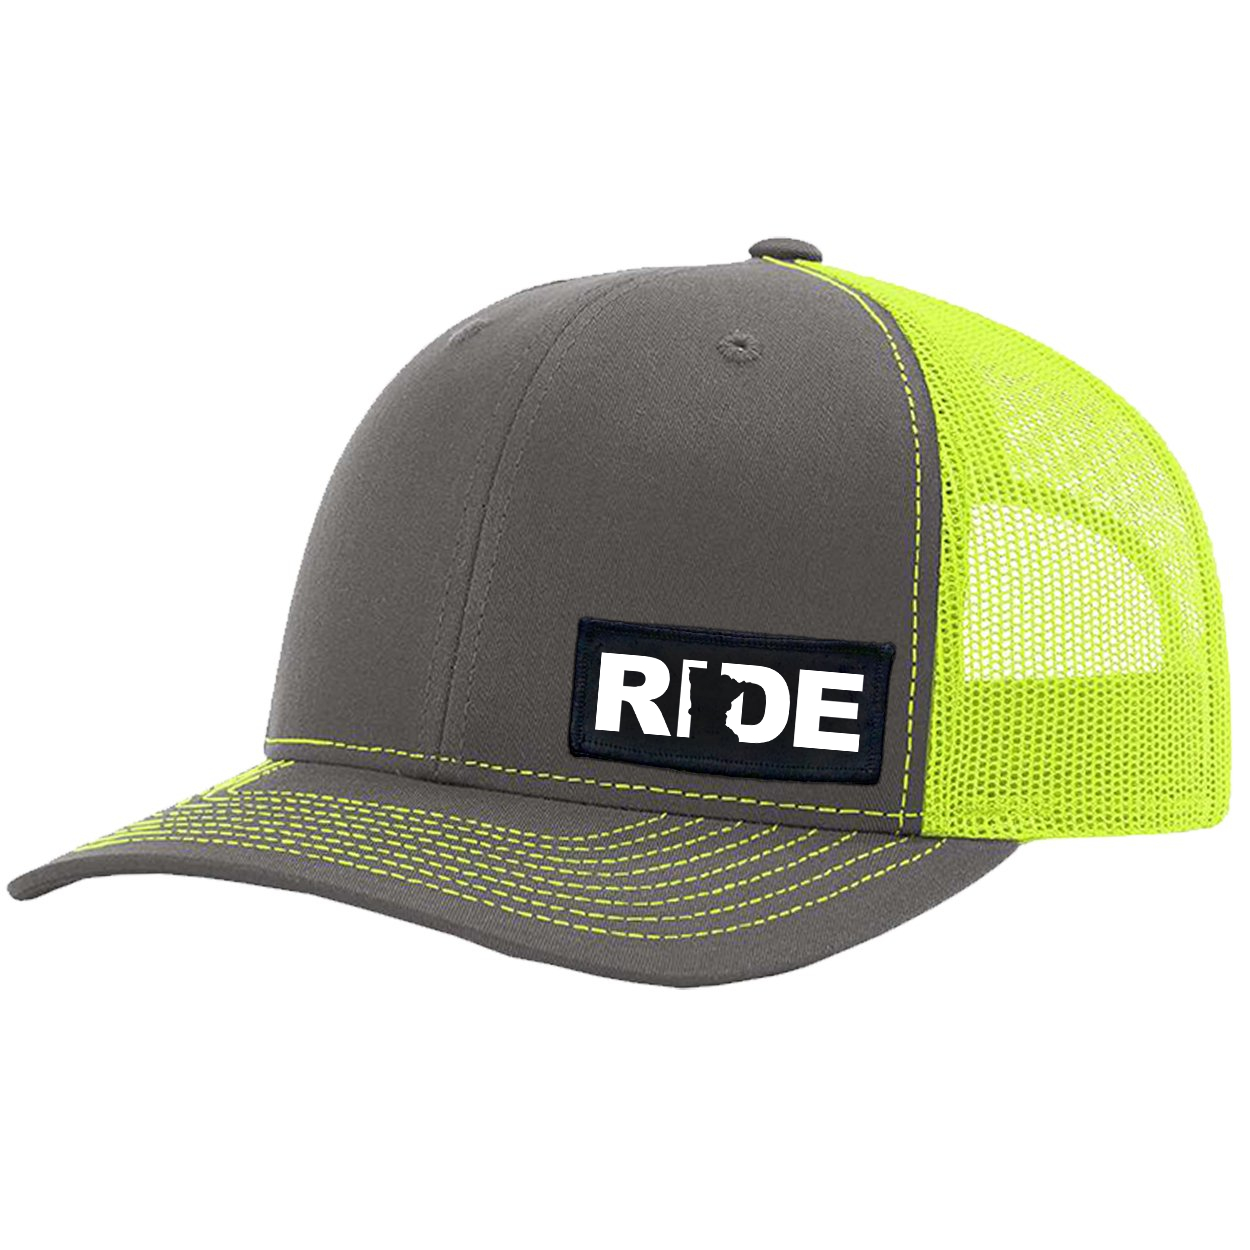 Ride Minnesota Night Out Woven Patch Snapback Trucker Hat Charcoal/Neon Yellow (White Logo)